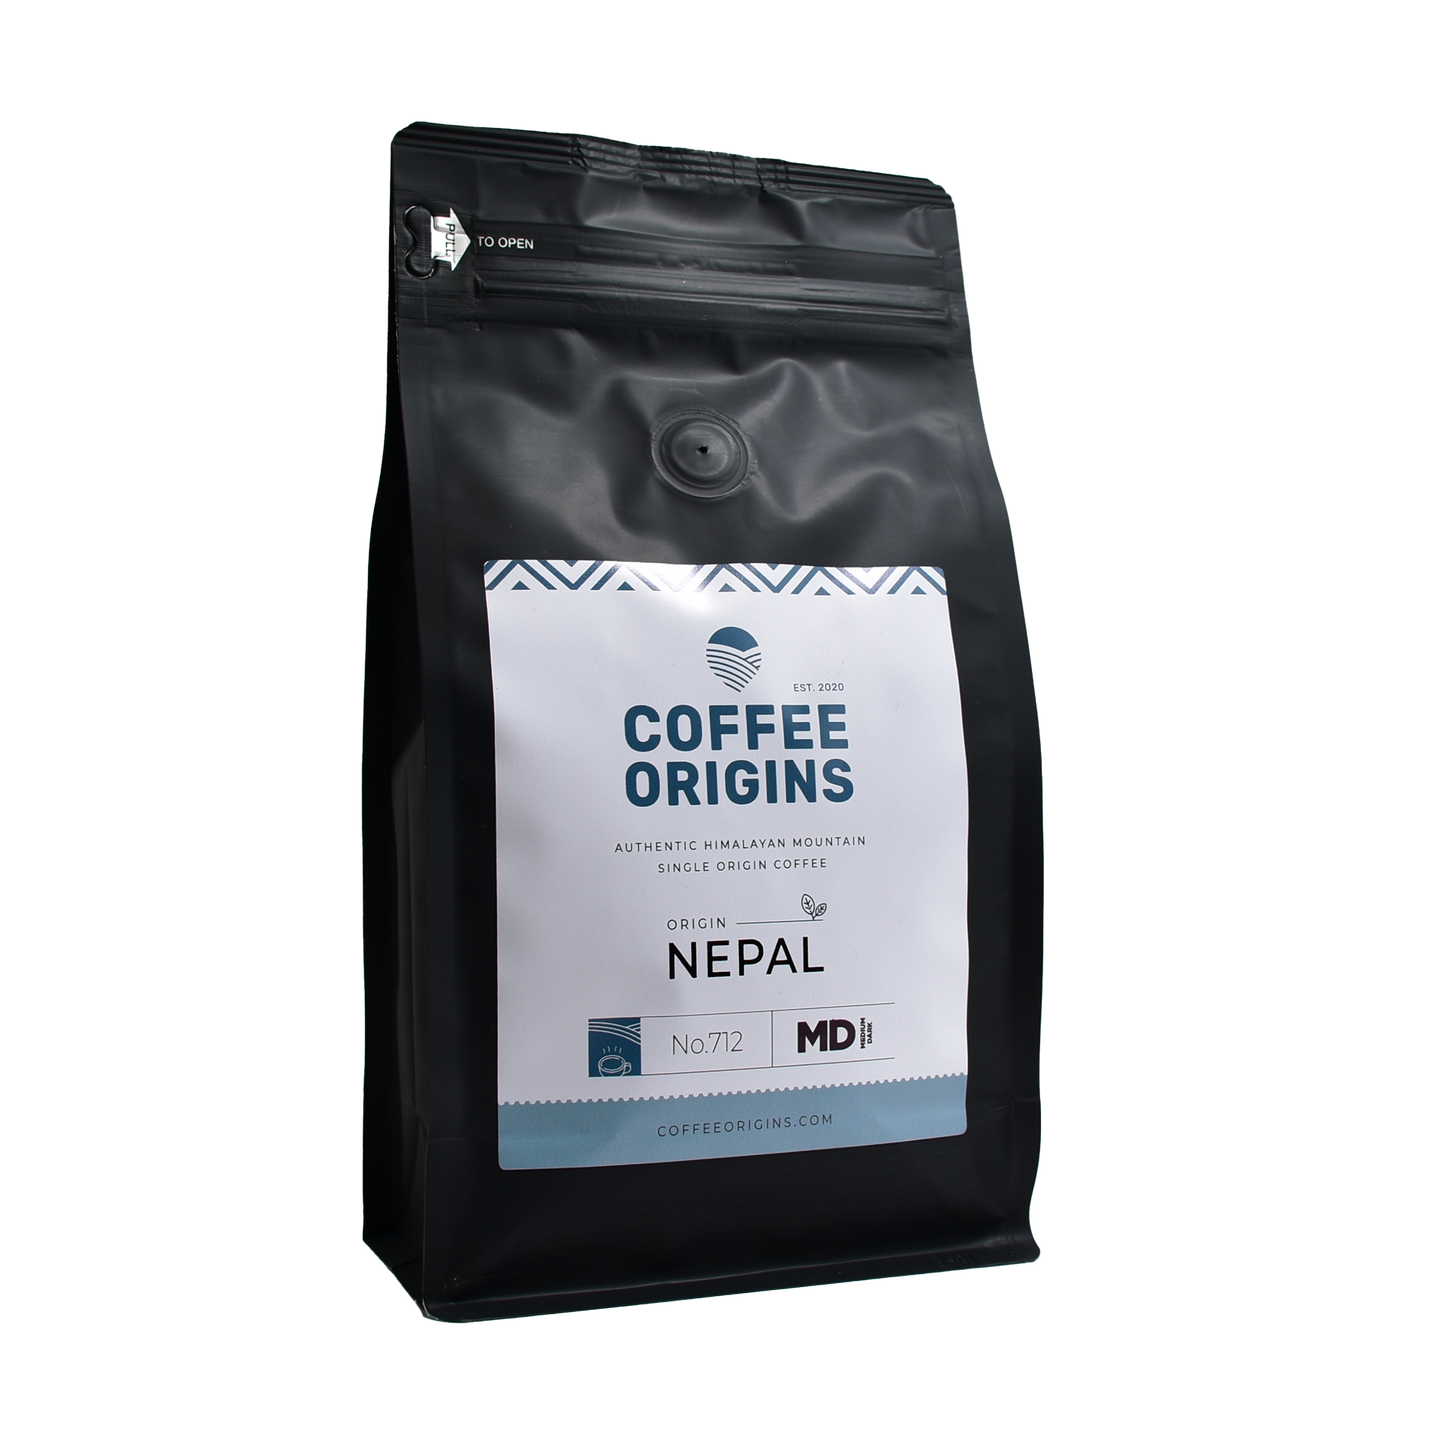 No. 712 Origin Nepal - Himalayan Mountain Coffee